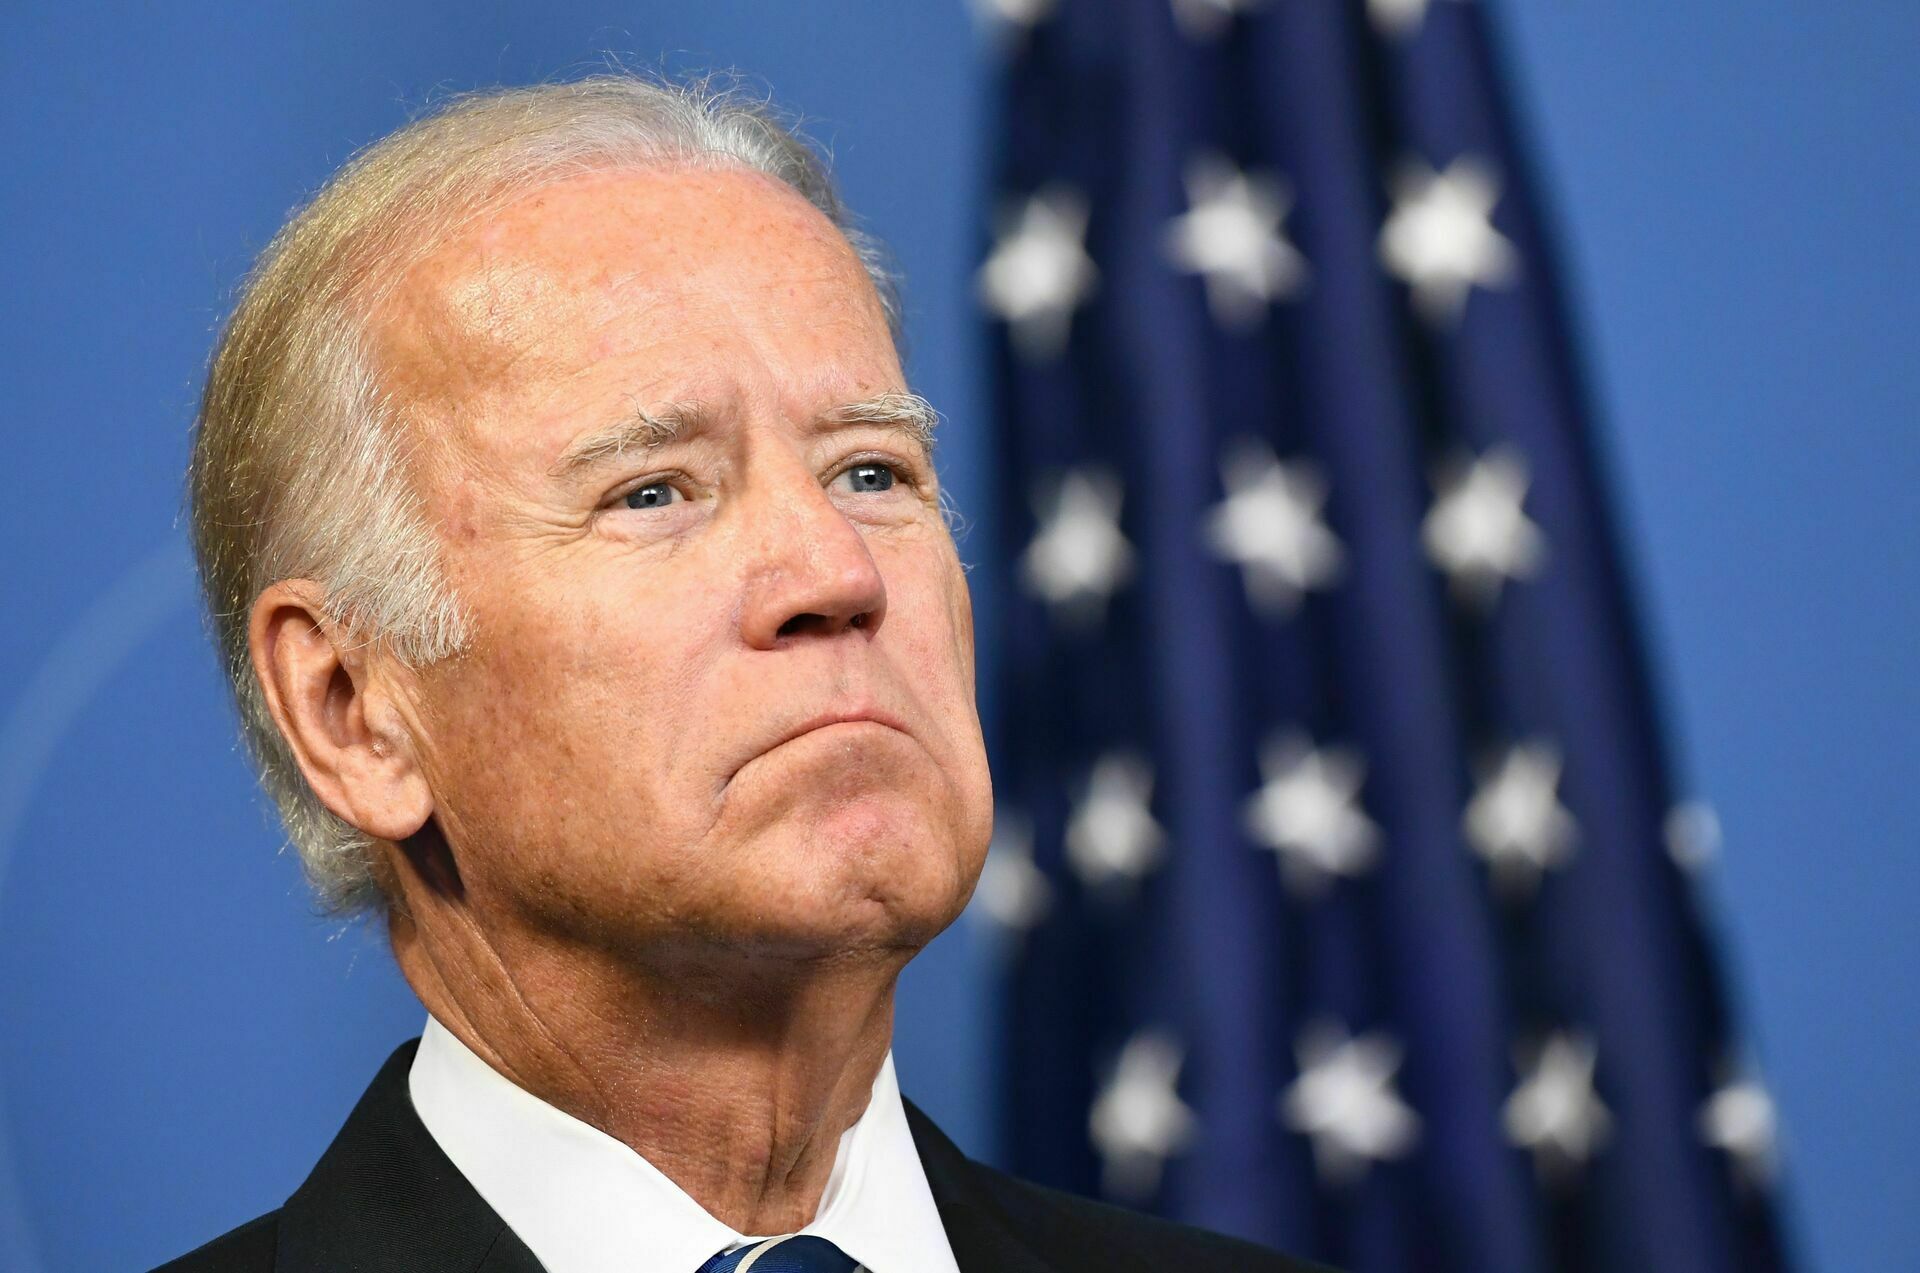 Joe Biden told about the problems of Vladimir Putin